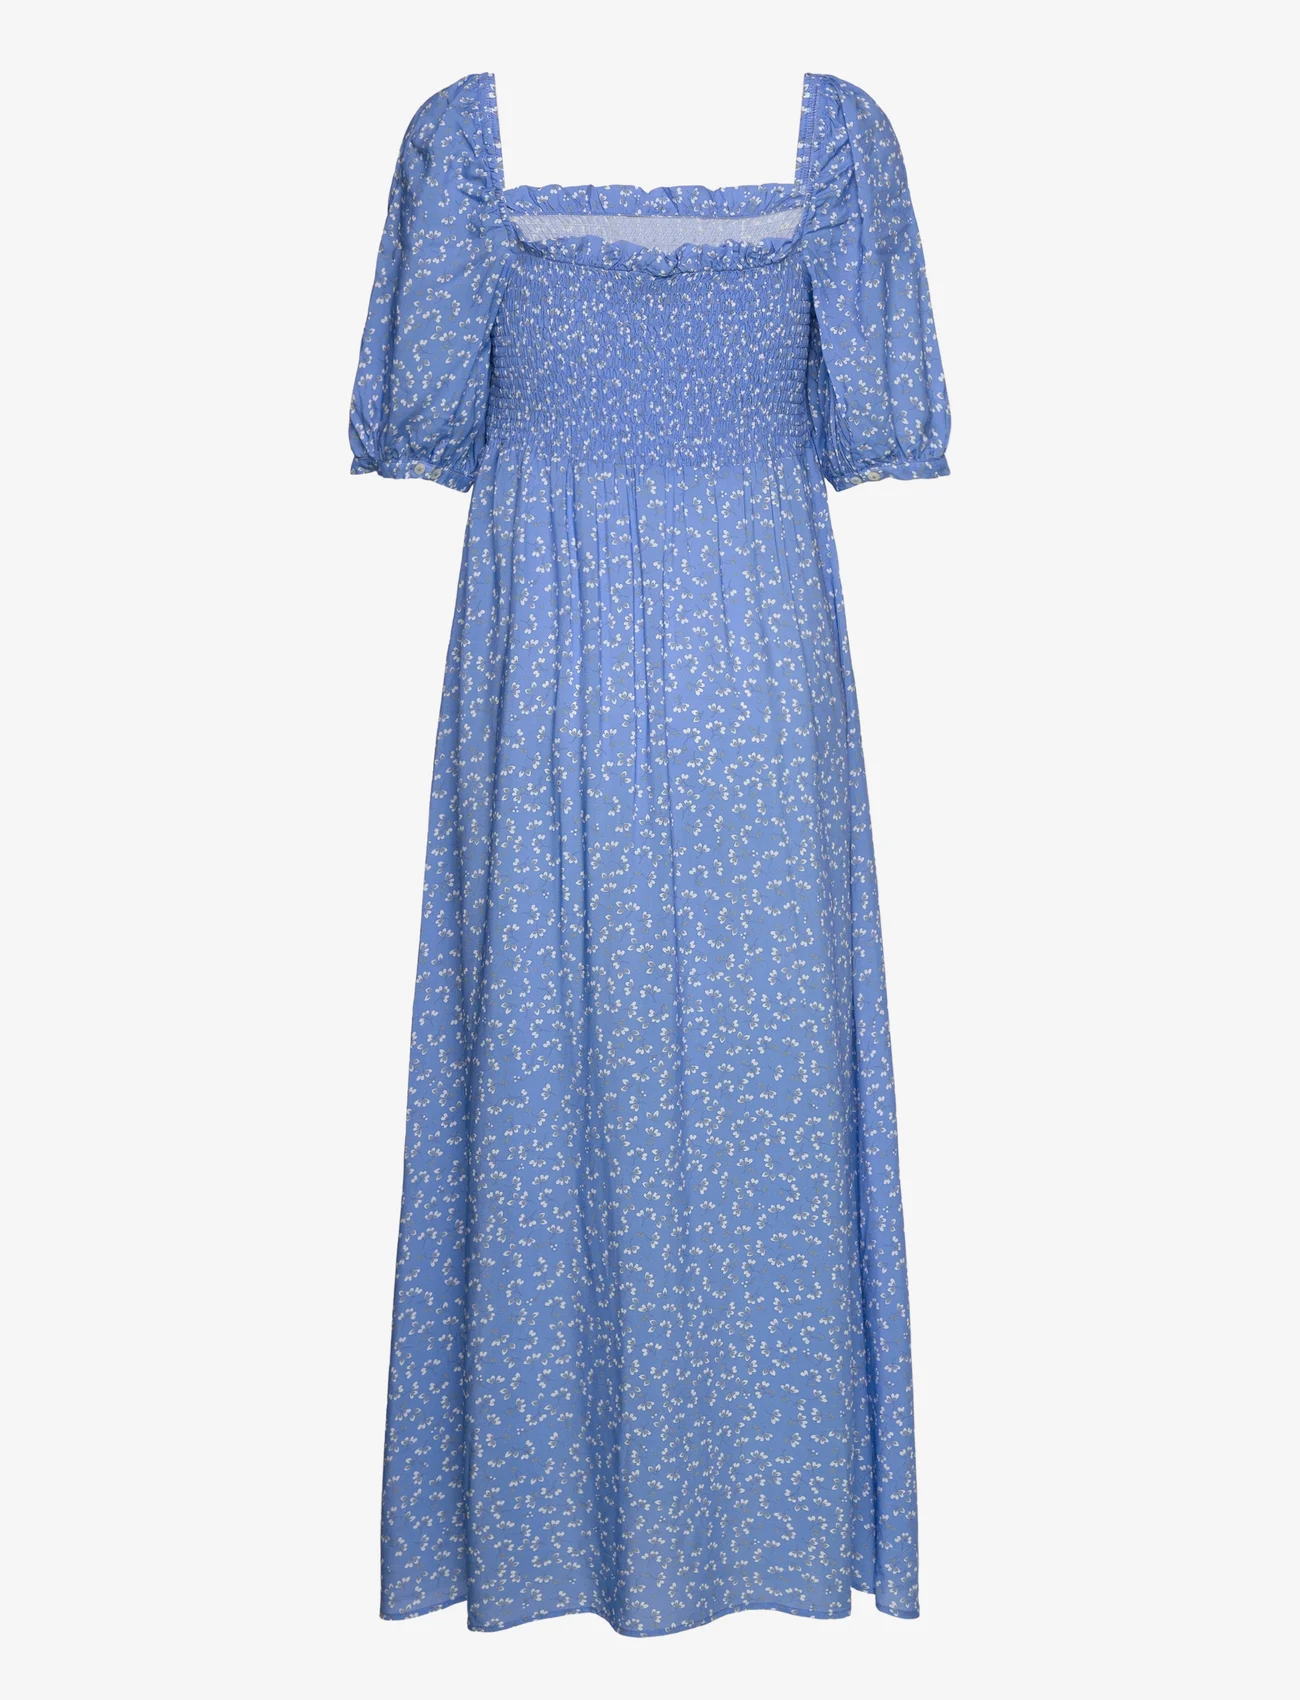 Lexington Clothing - Alaia Printed Dress - blue flower print - 1